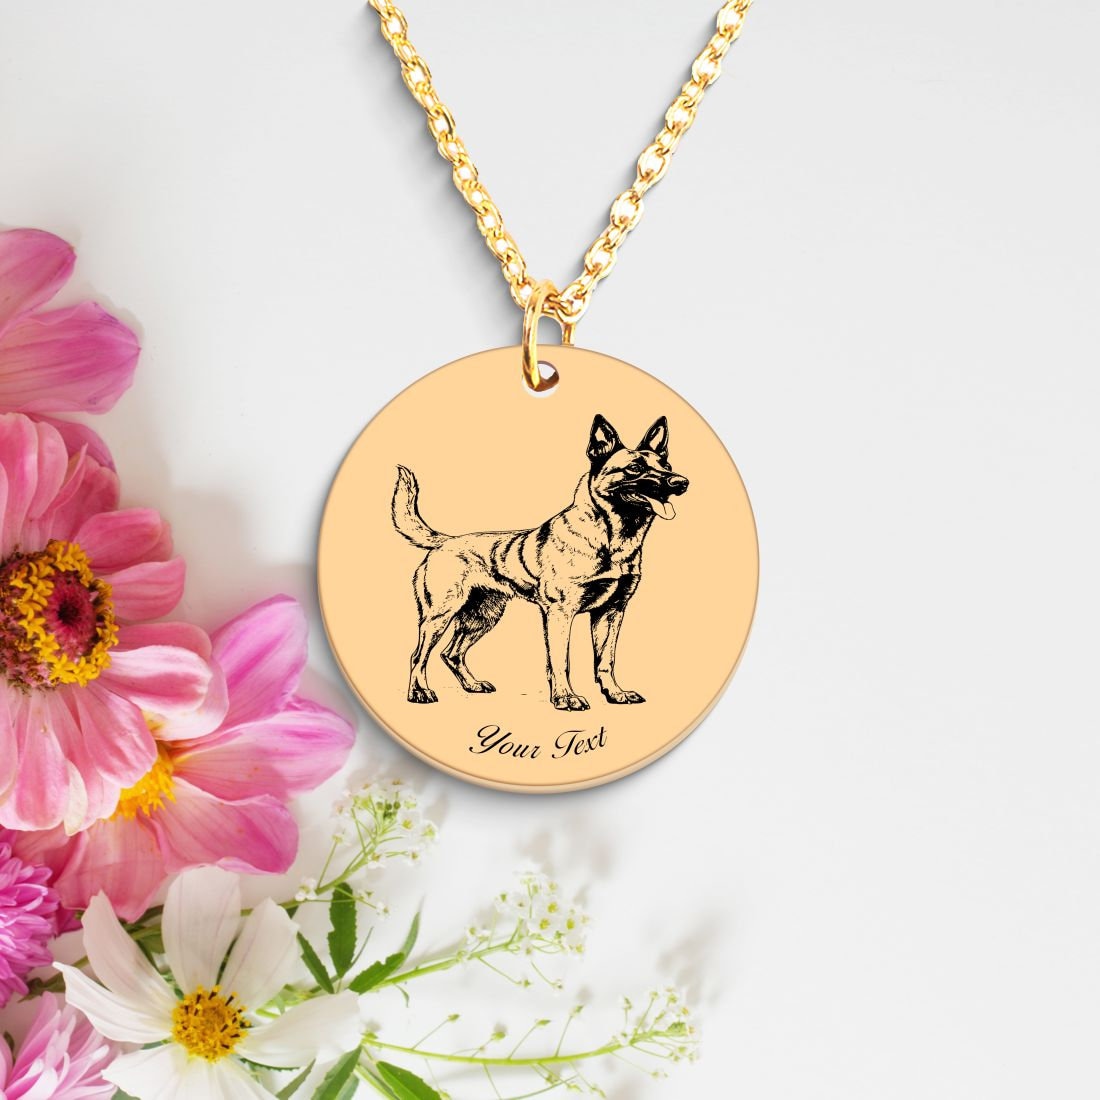 Belgian Malinois Dog Portrait Necklace - Personalizable Jewelry